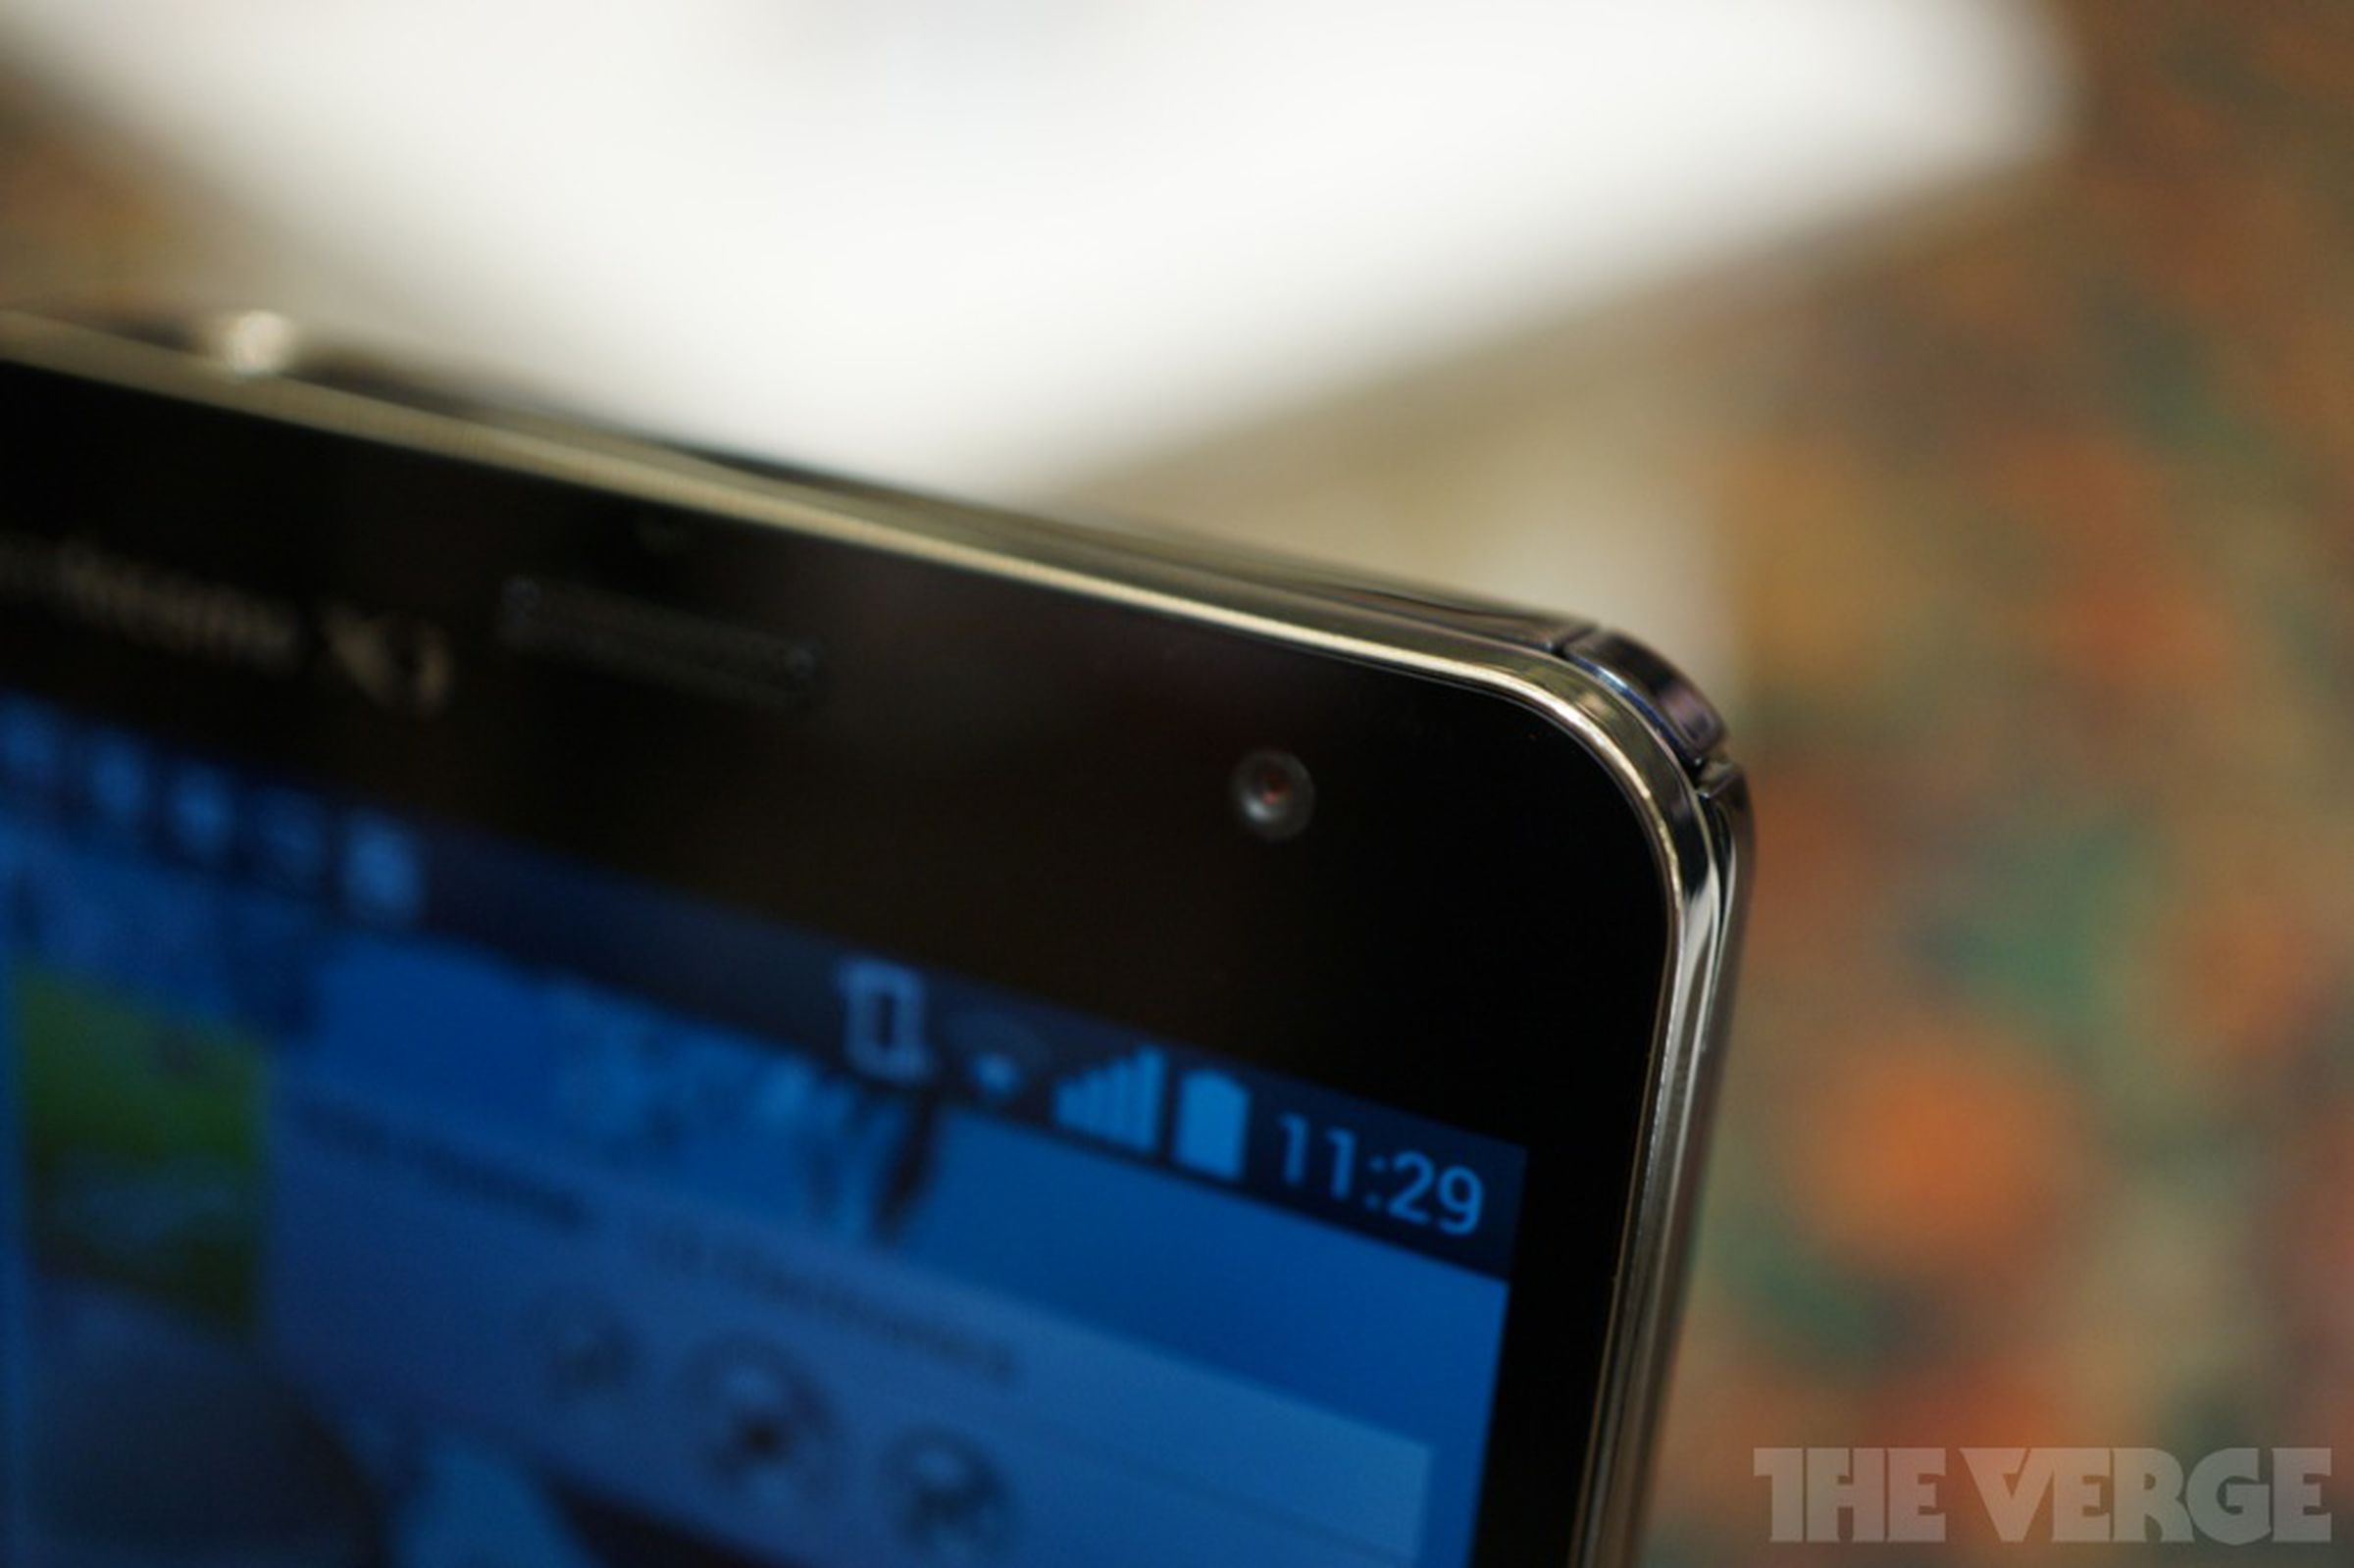 LG Optimus G Pro hands-on photos